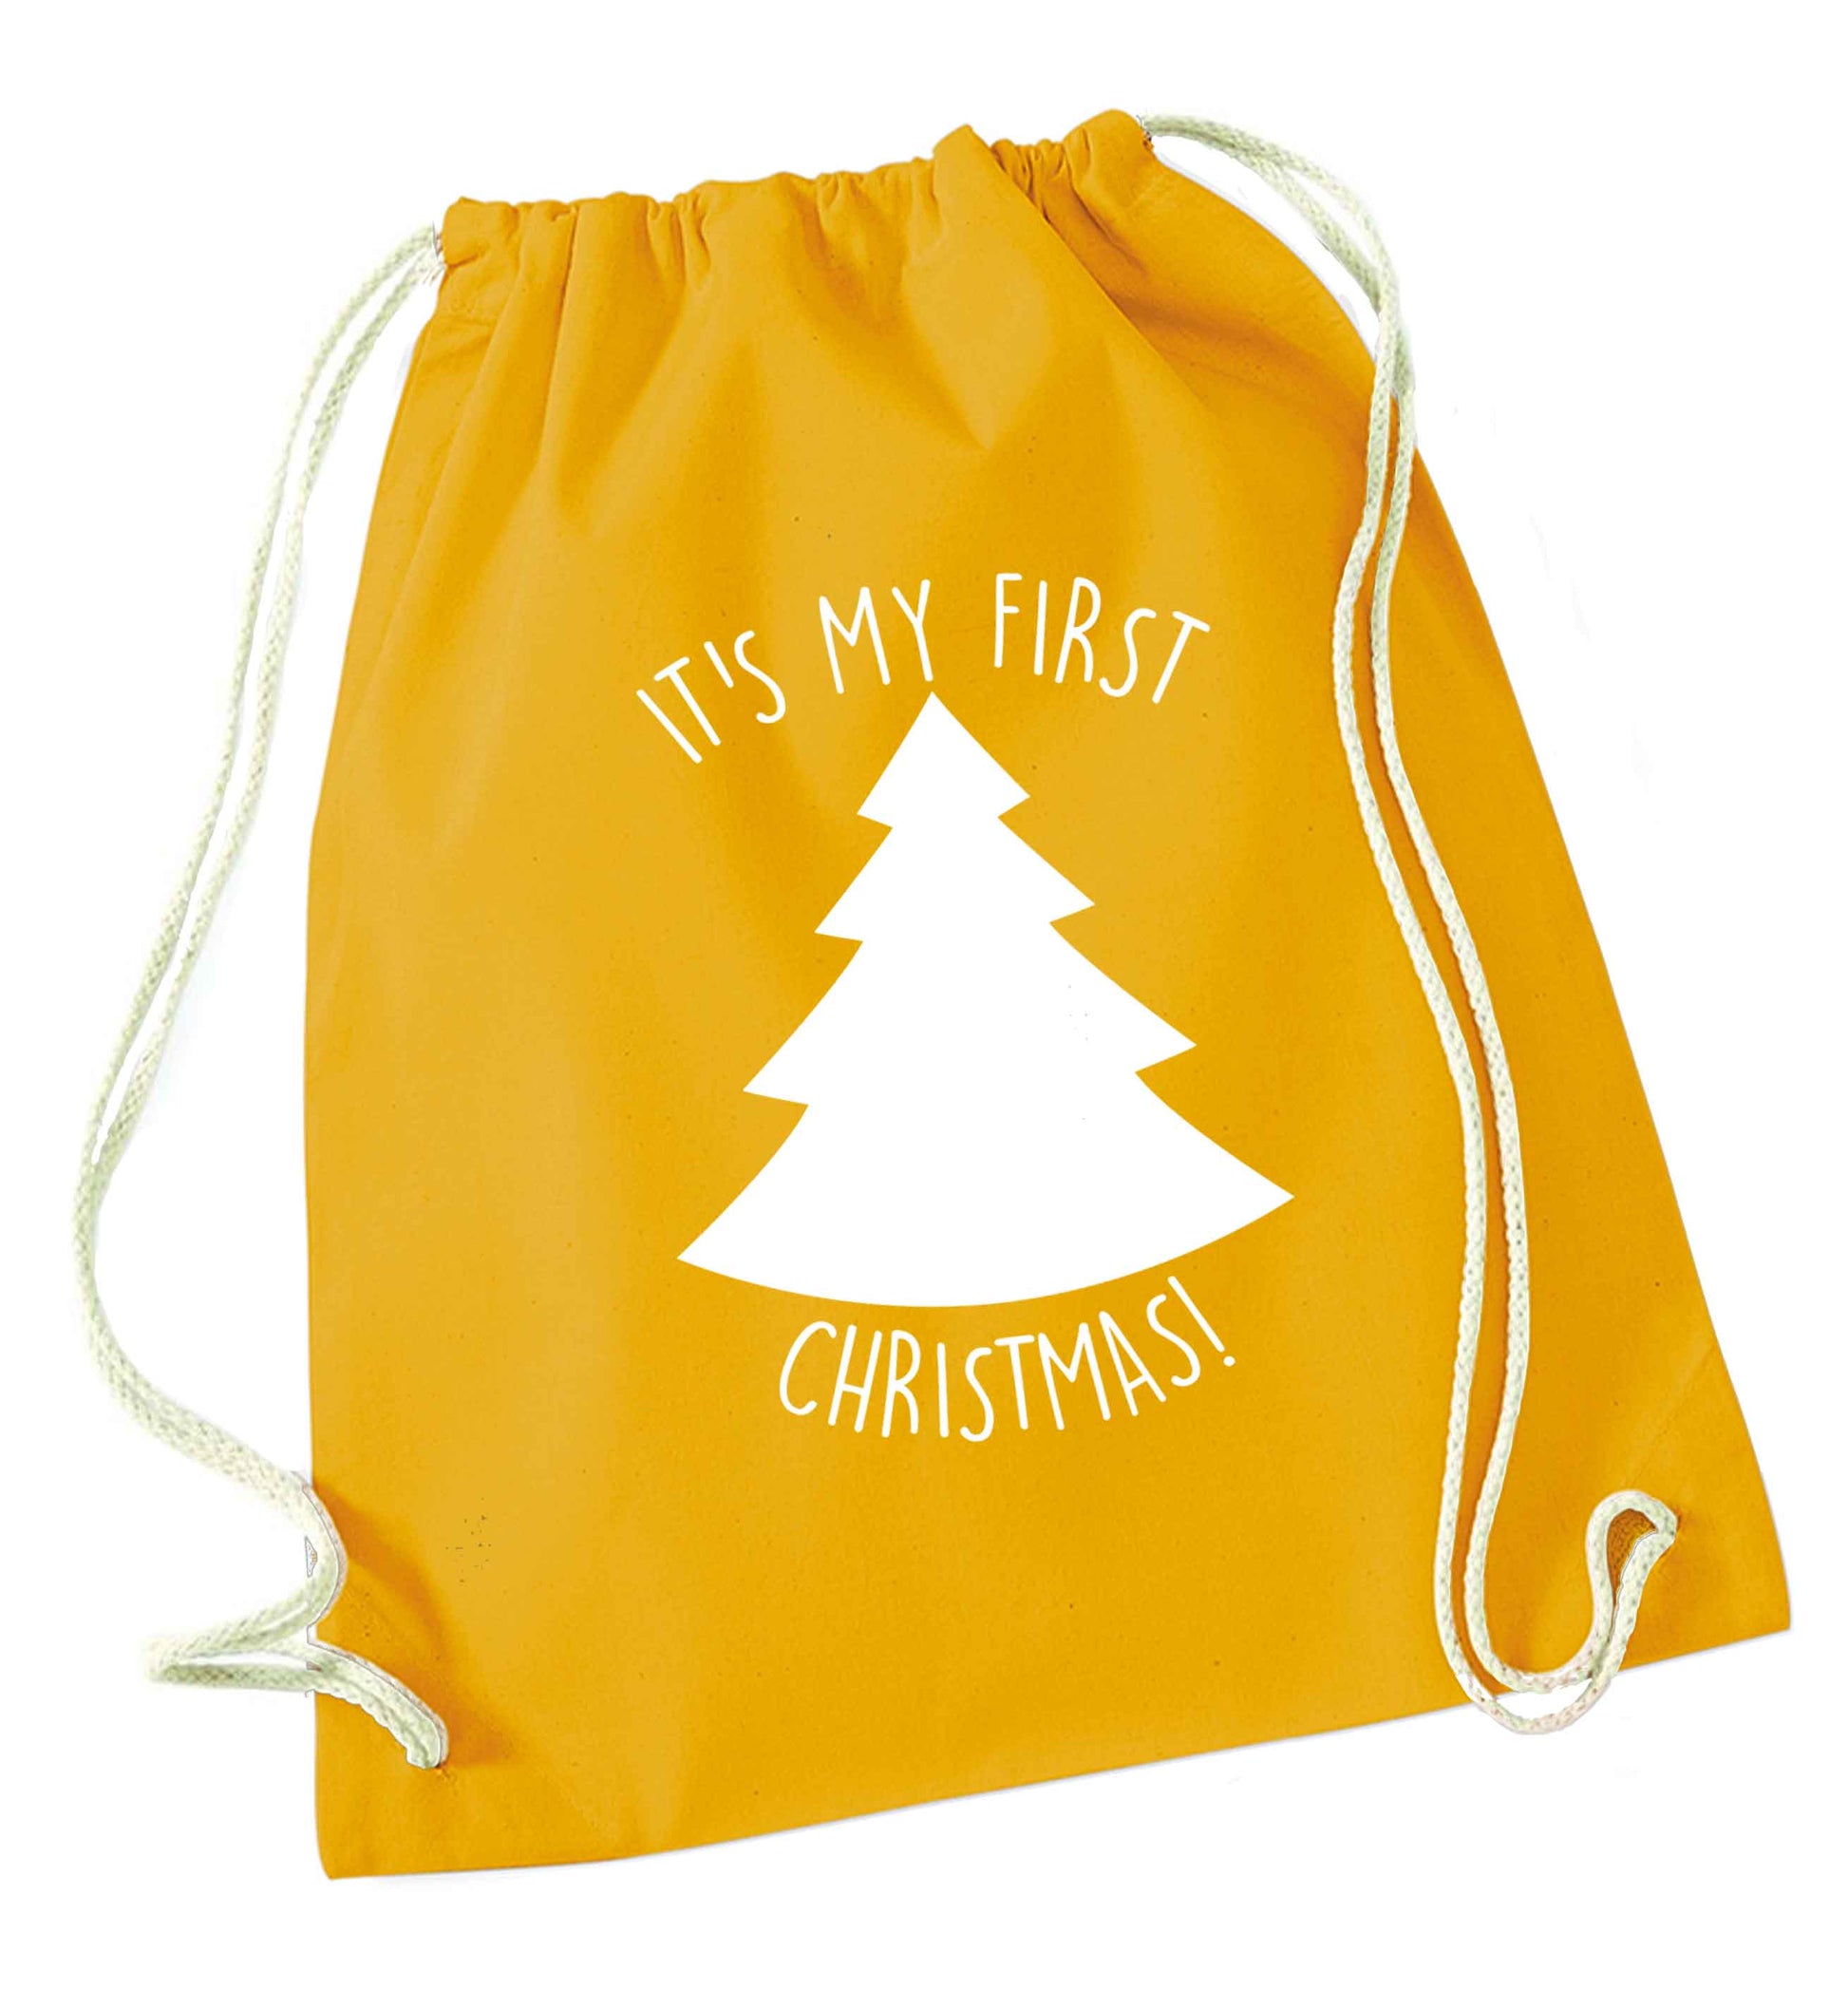 It's my first Christmas - tree mustard drawstring bag